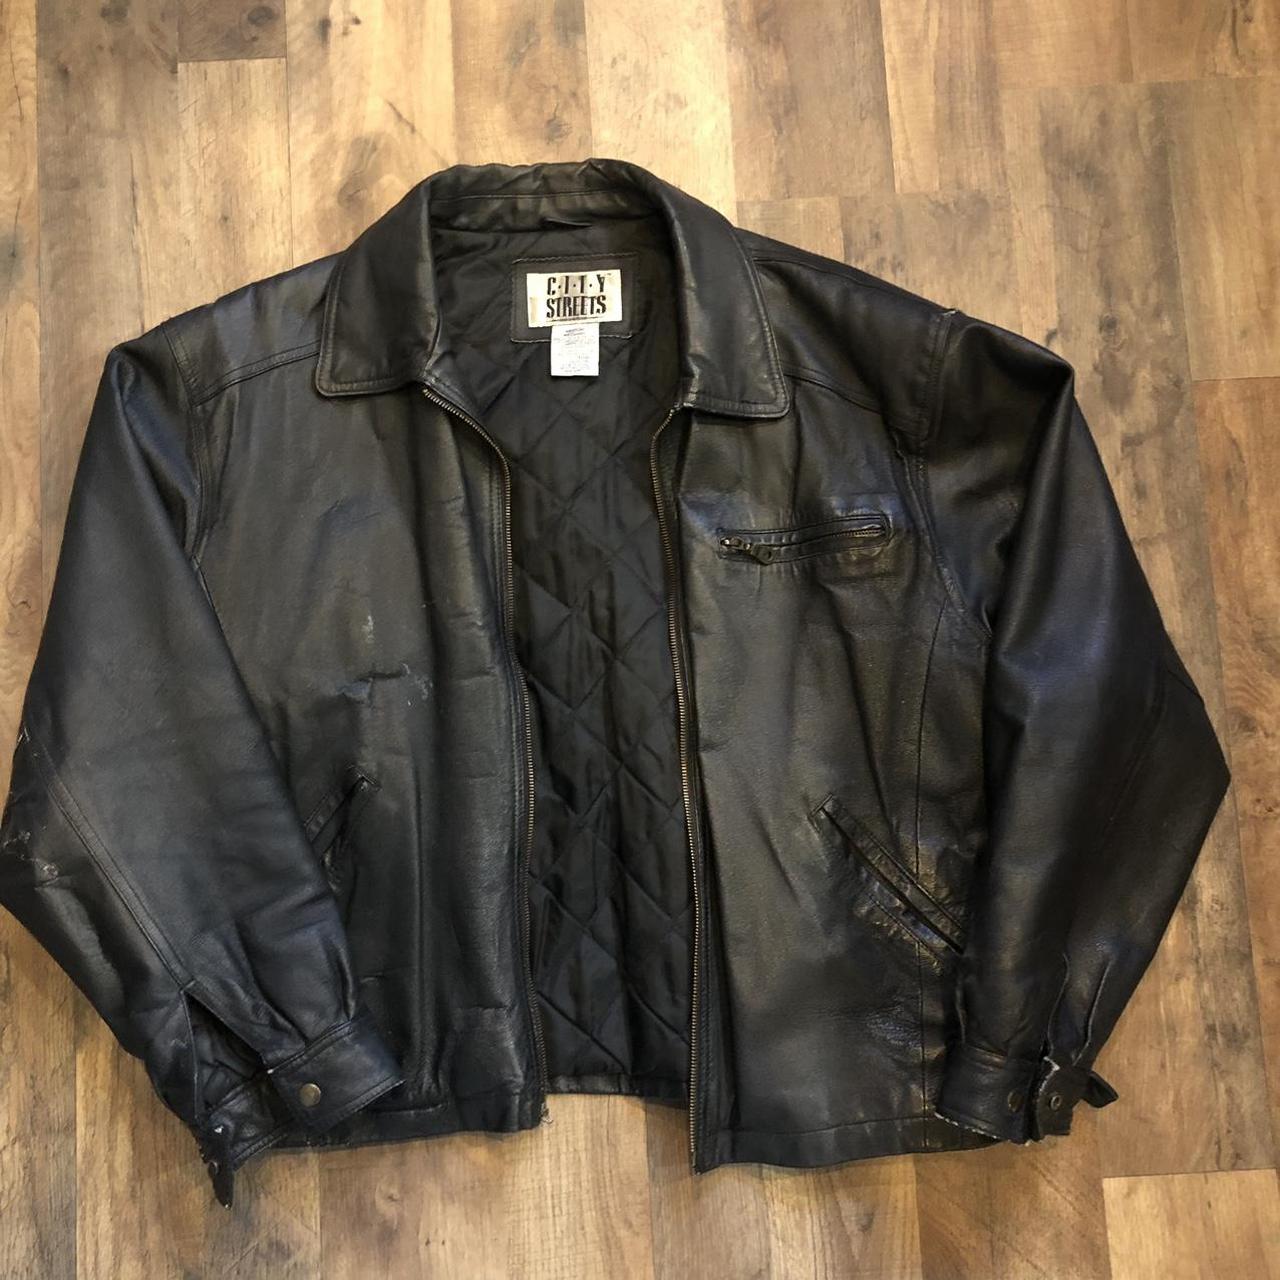 Vintage black leather jacket. Good condition no... - Depop